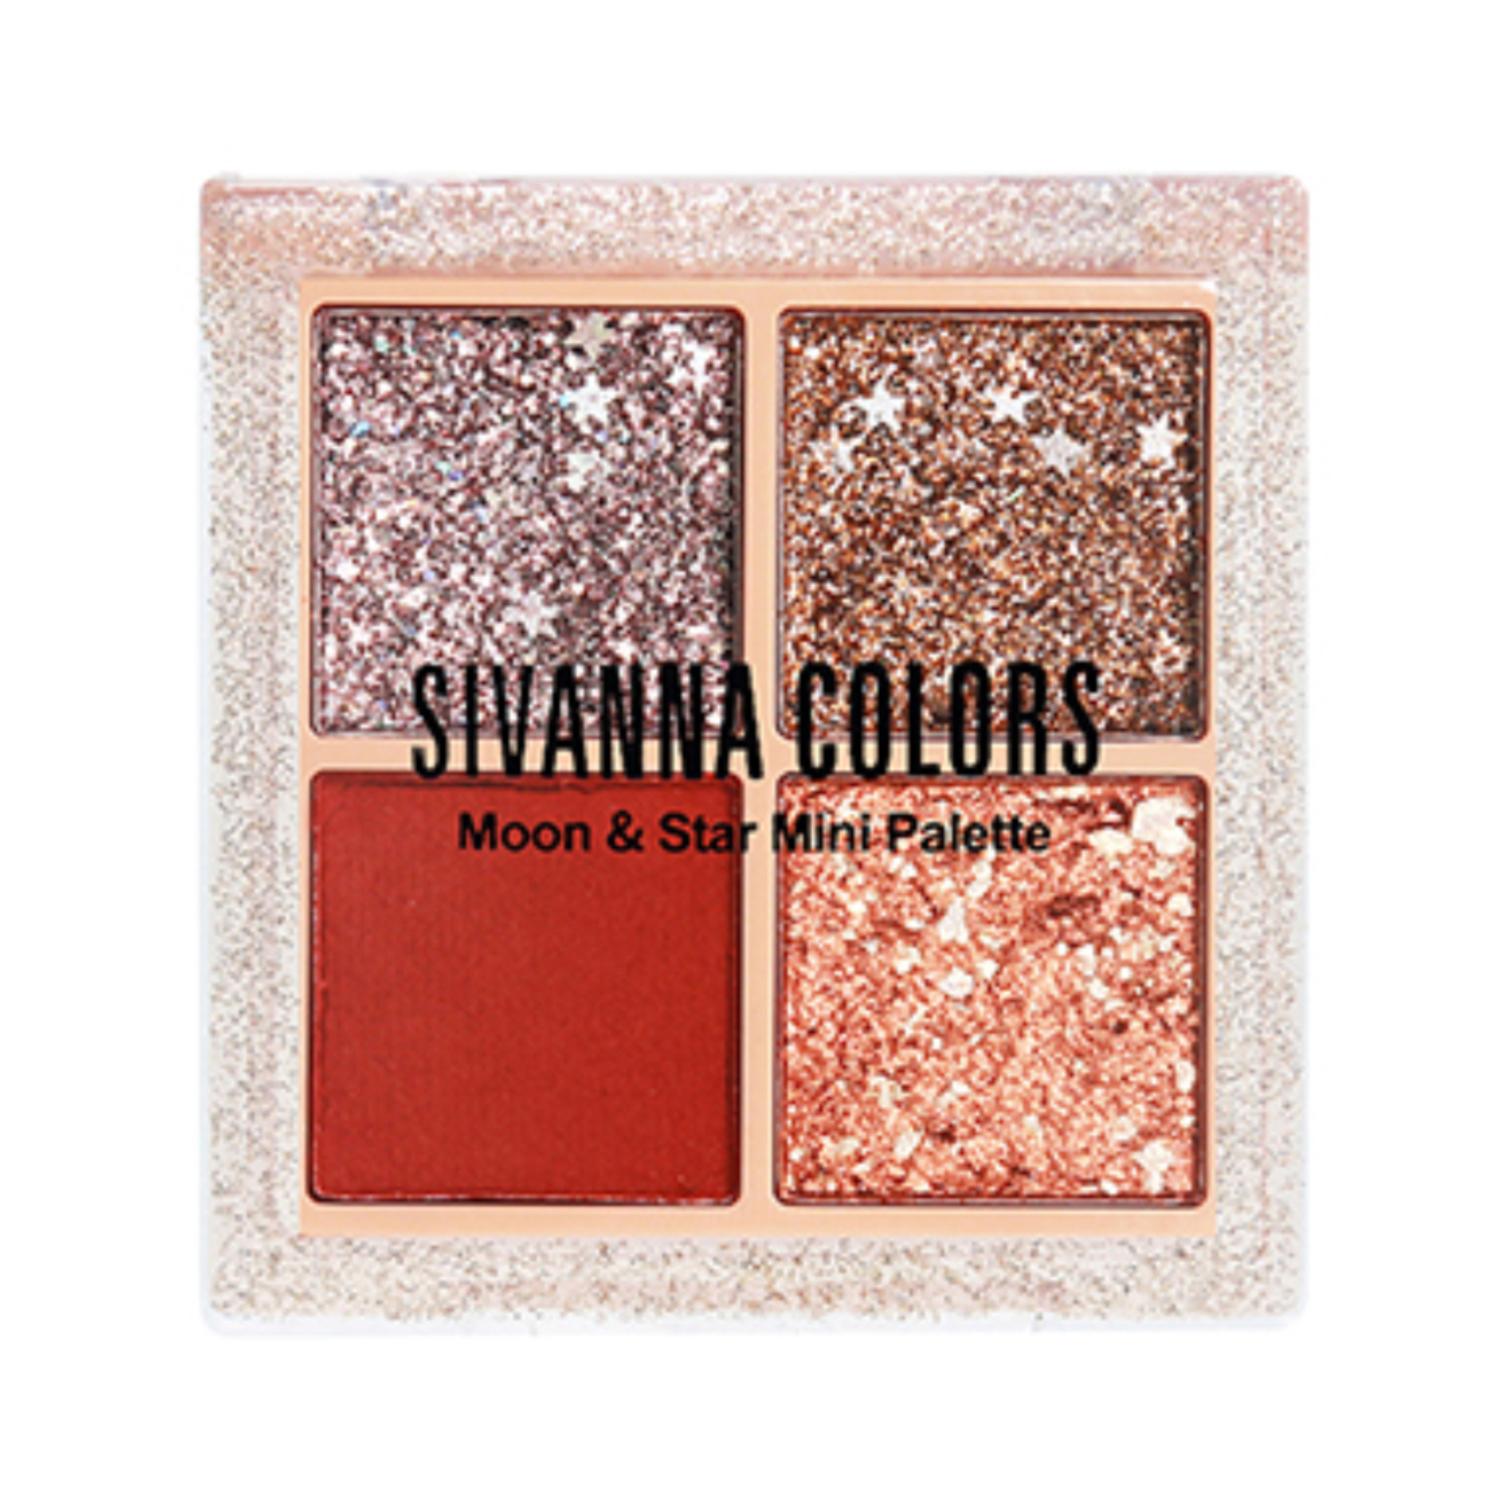 Sivanna | Sivanna Colors Moon & Star Mini Palette - 04 Shade (3g)